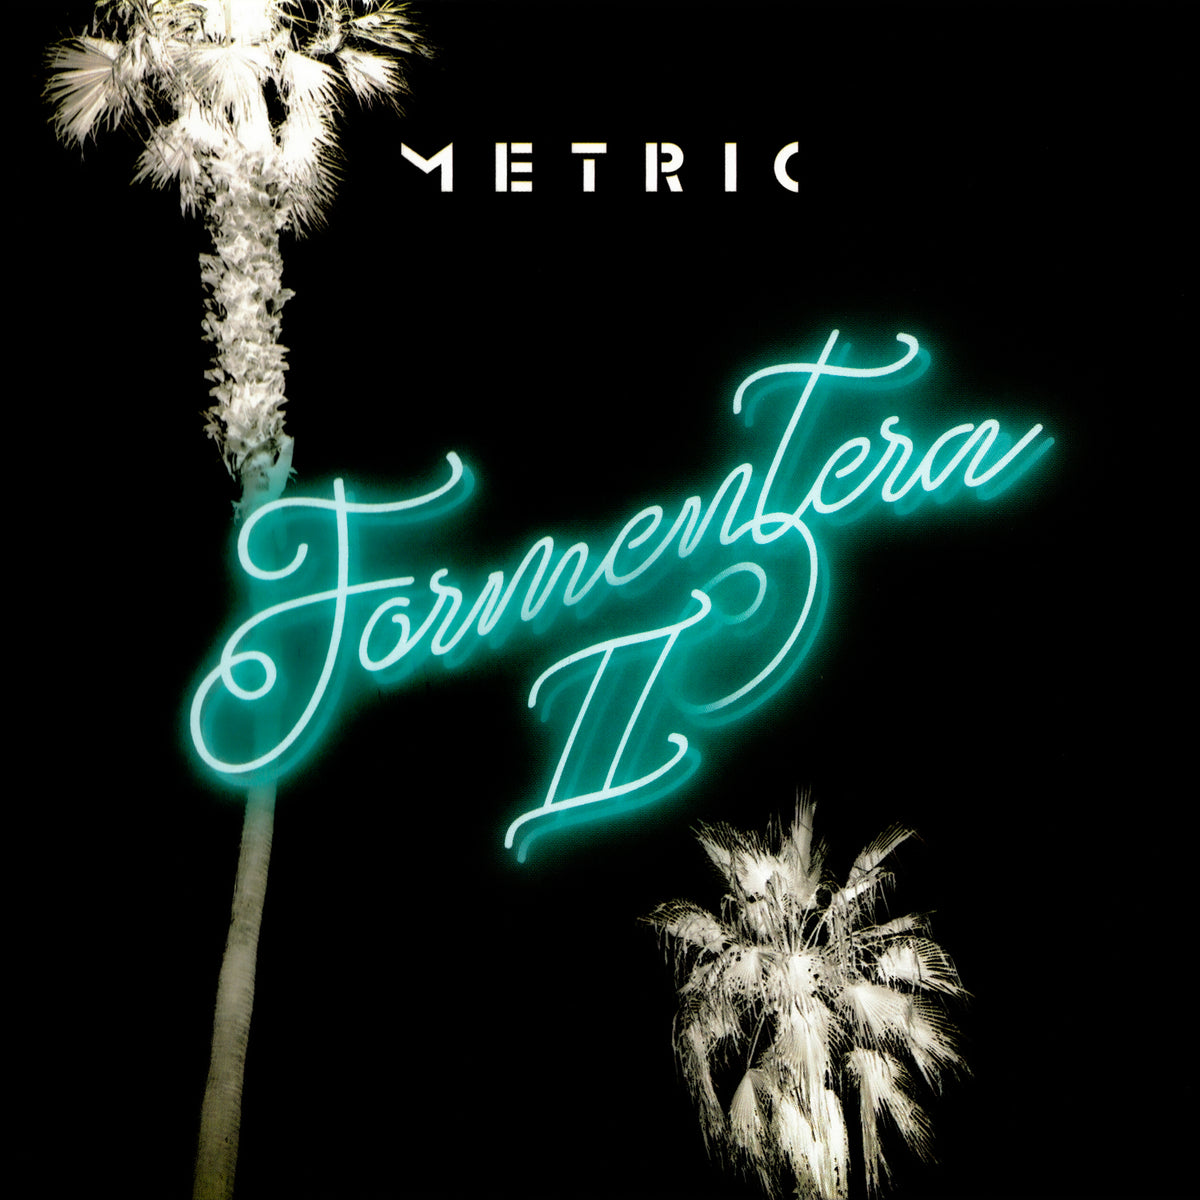 Metric-FormenteraII_1200x1200.jpg